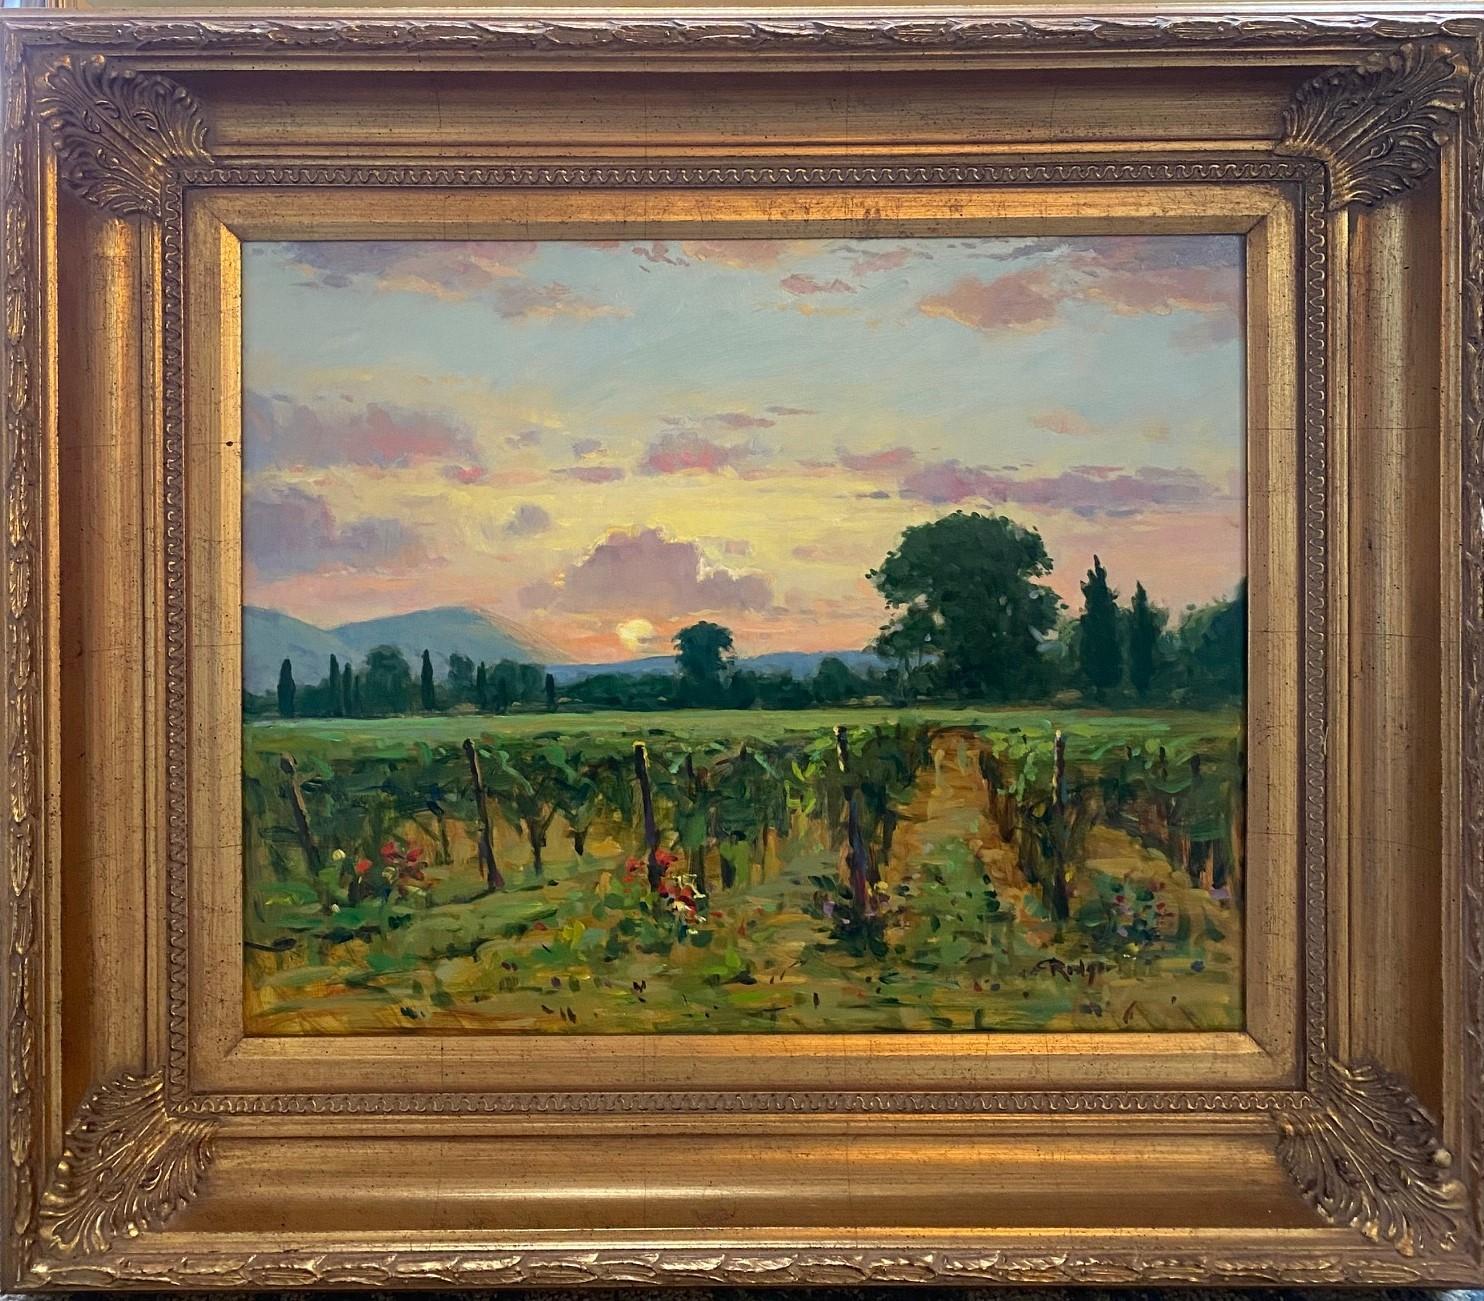 Jim Rodgers Landscape Painting - Lyrical Light in Les Baux, original French impressionist landscape oil painting